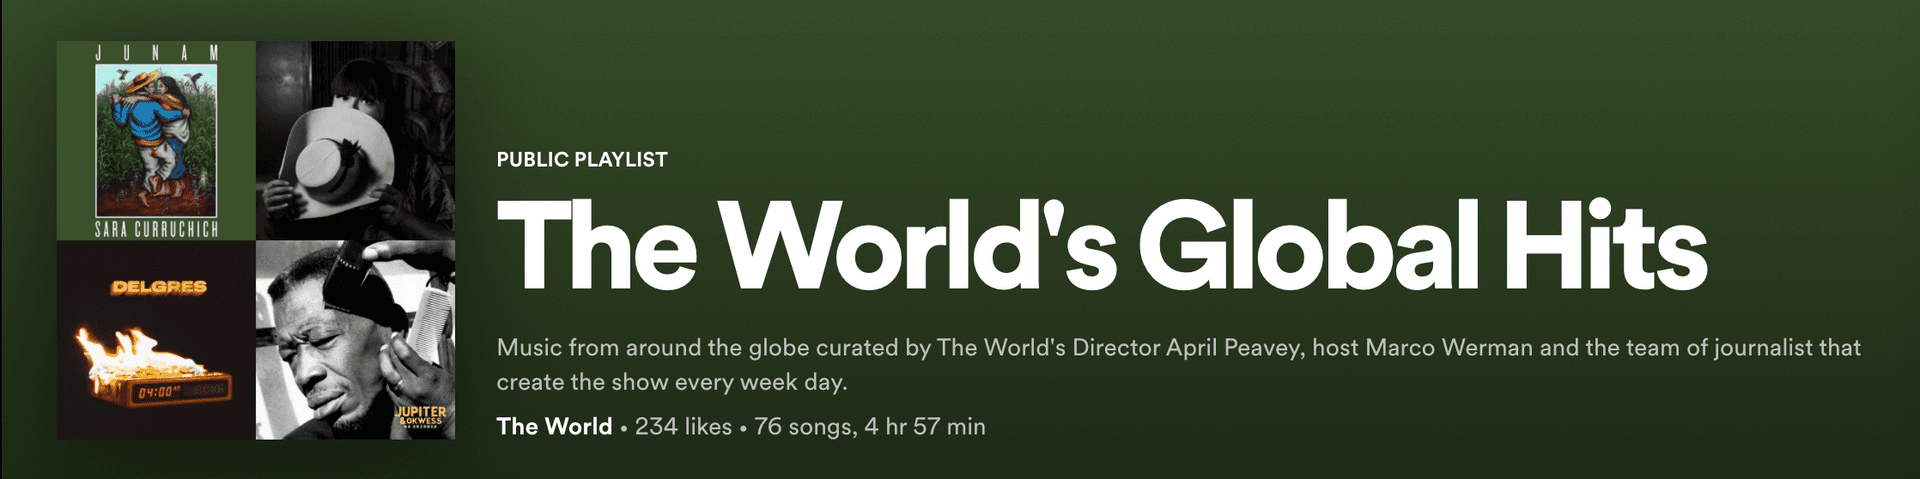 The World's Global Hits